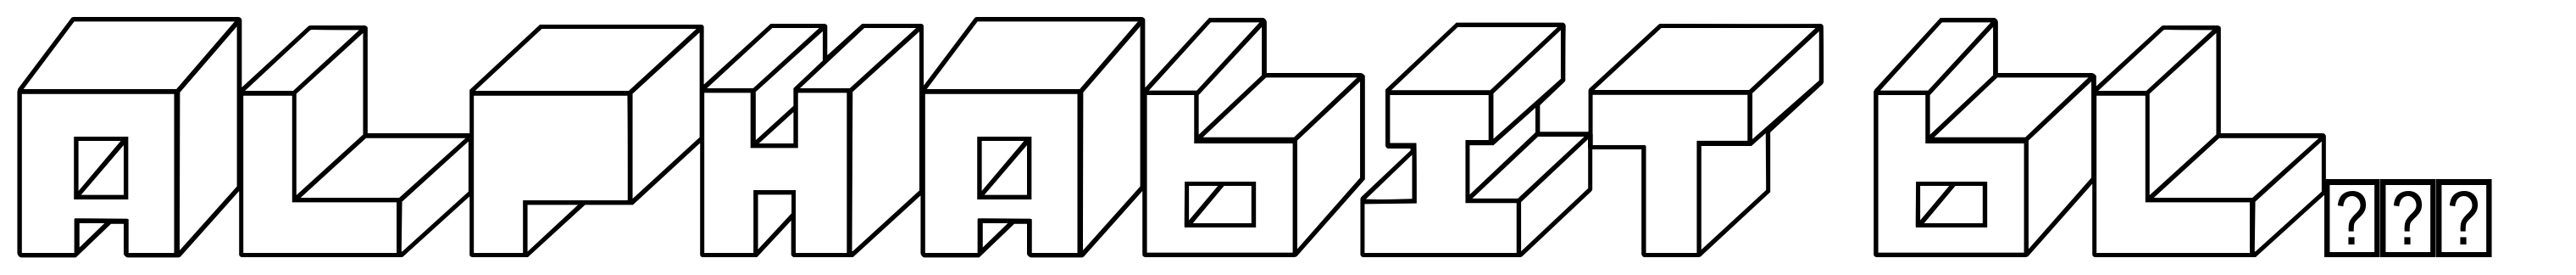 Alphabit Blocks